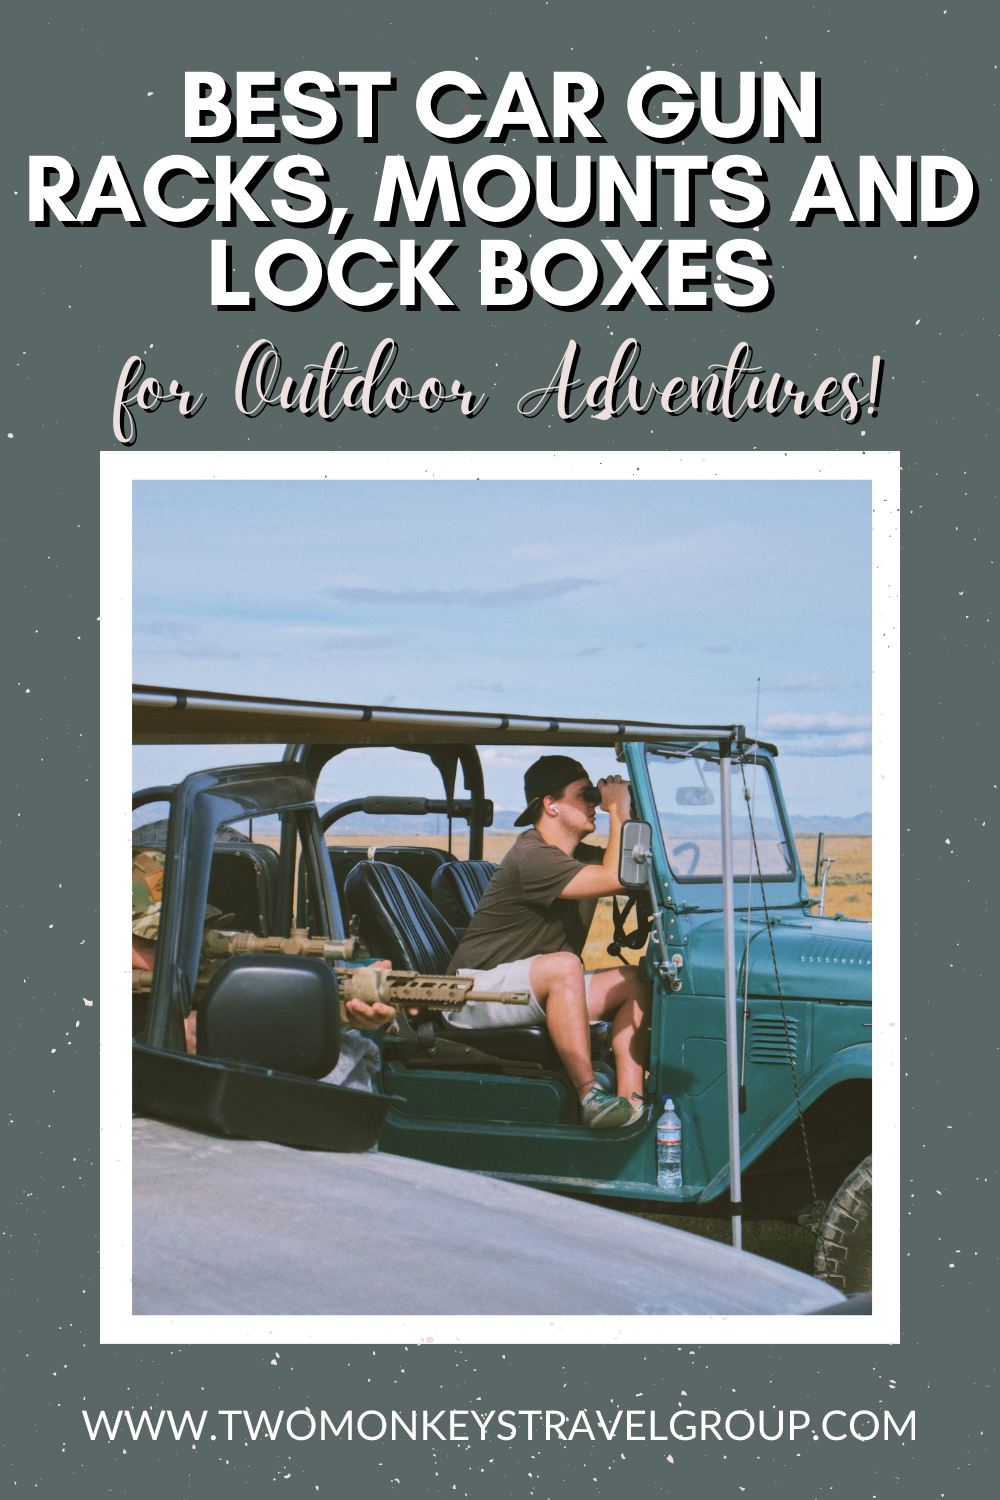 20 Best Car Gun Racks, Mounts and Lock boxes for Outdoor Adventures!